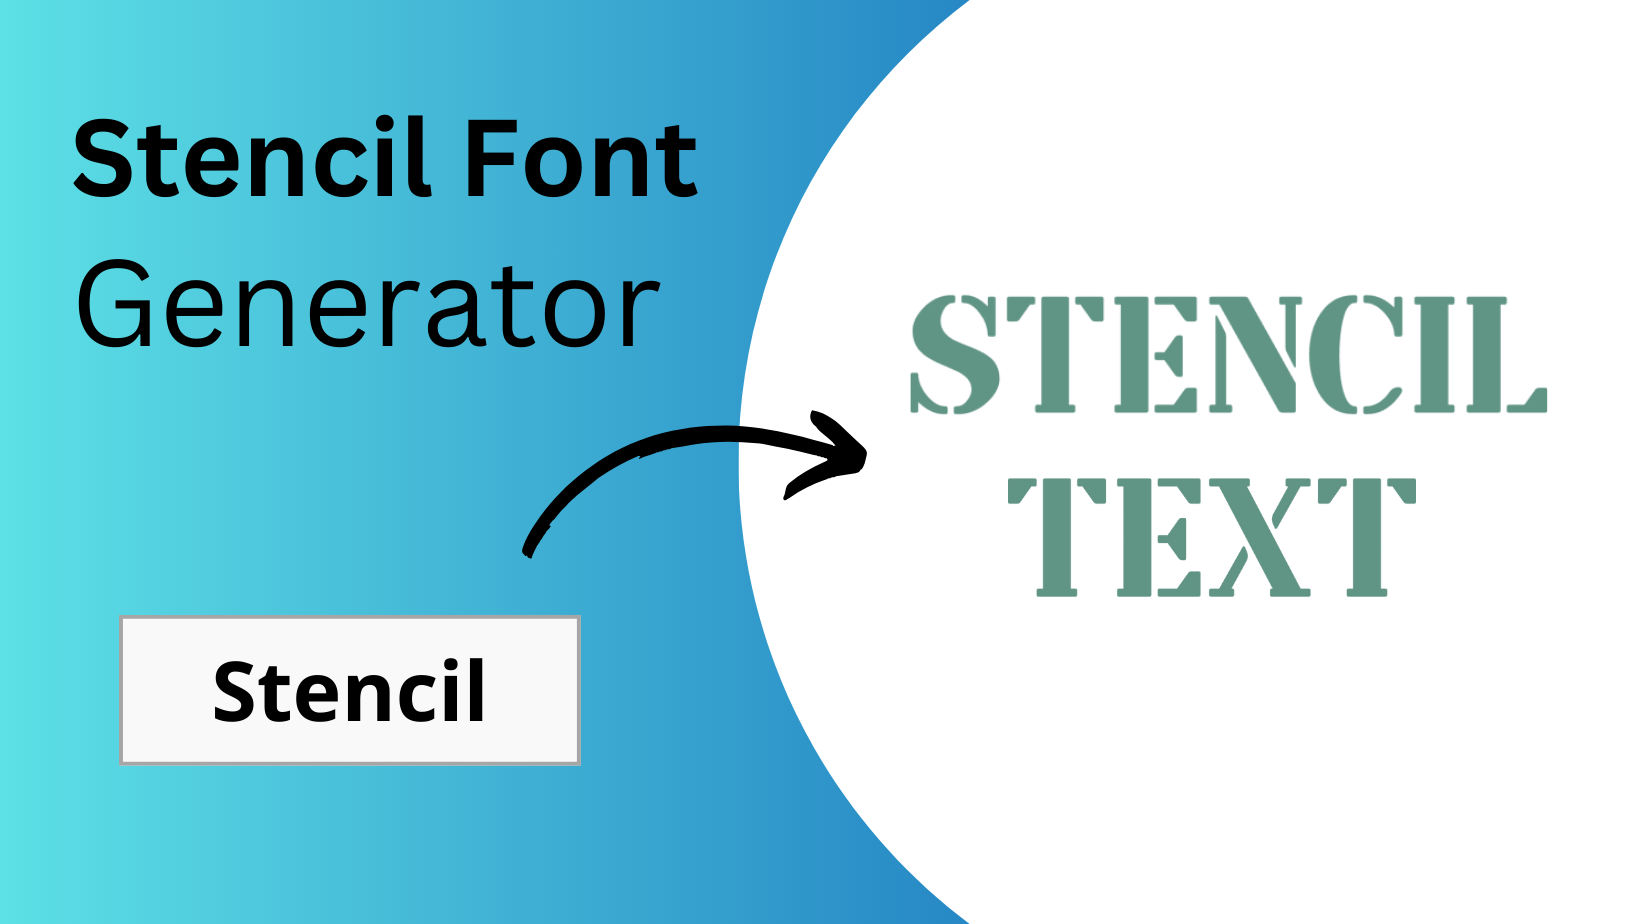 Custom Cut Logo & Text Stencils - Online Stencil Maker